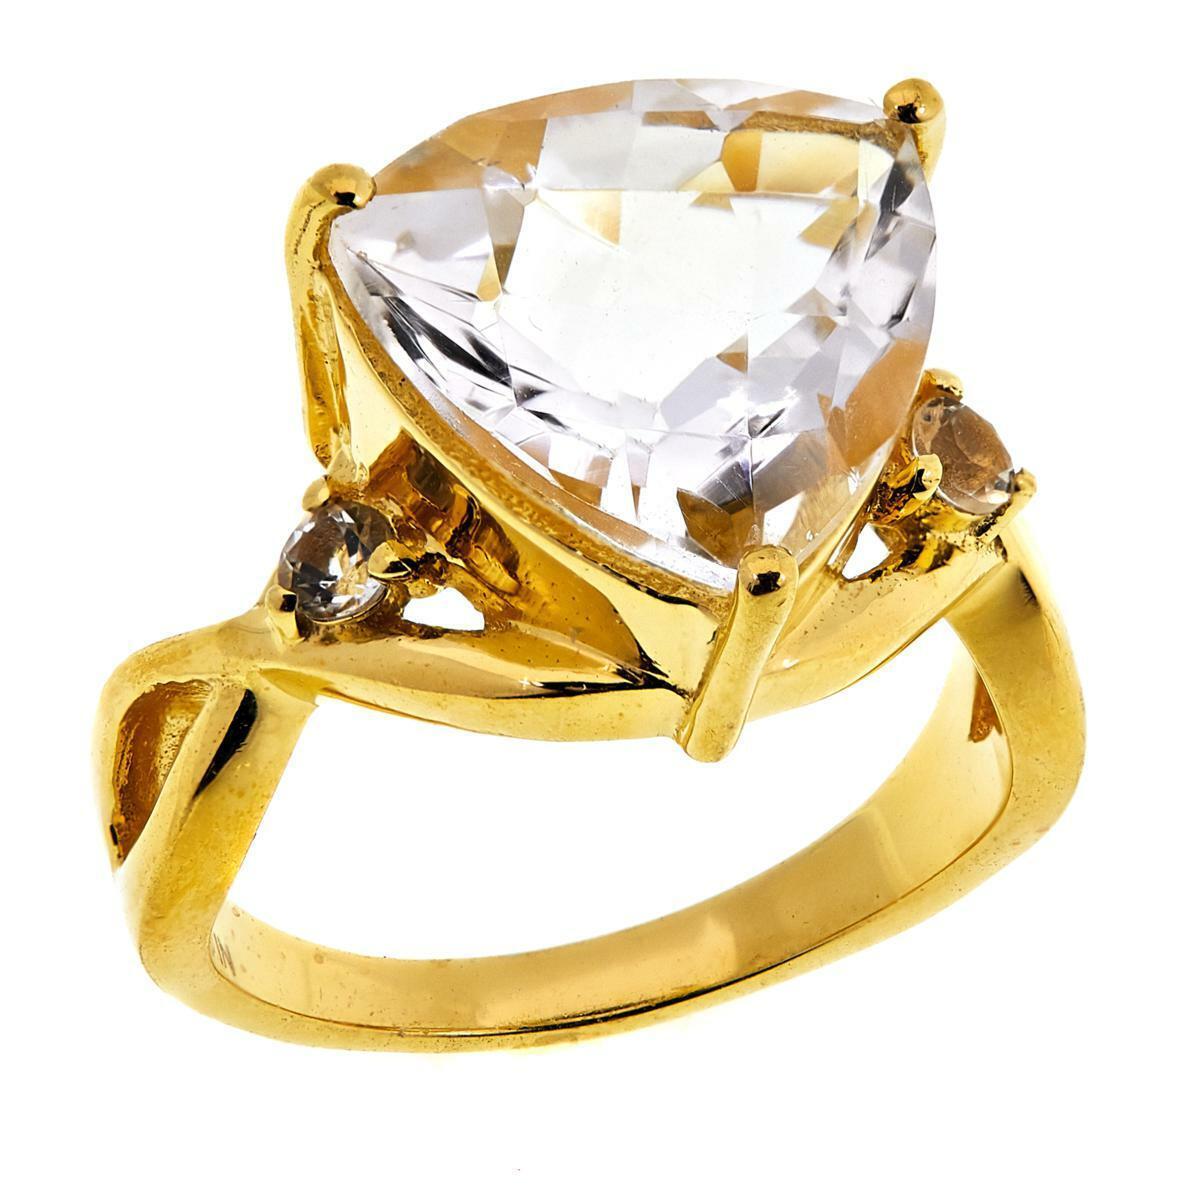 Herkimer Mines "Diamond" Trilliant & Round Cut Quartz Ring, Size 10 (Goldtone)